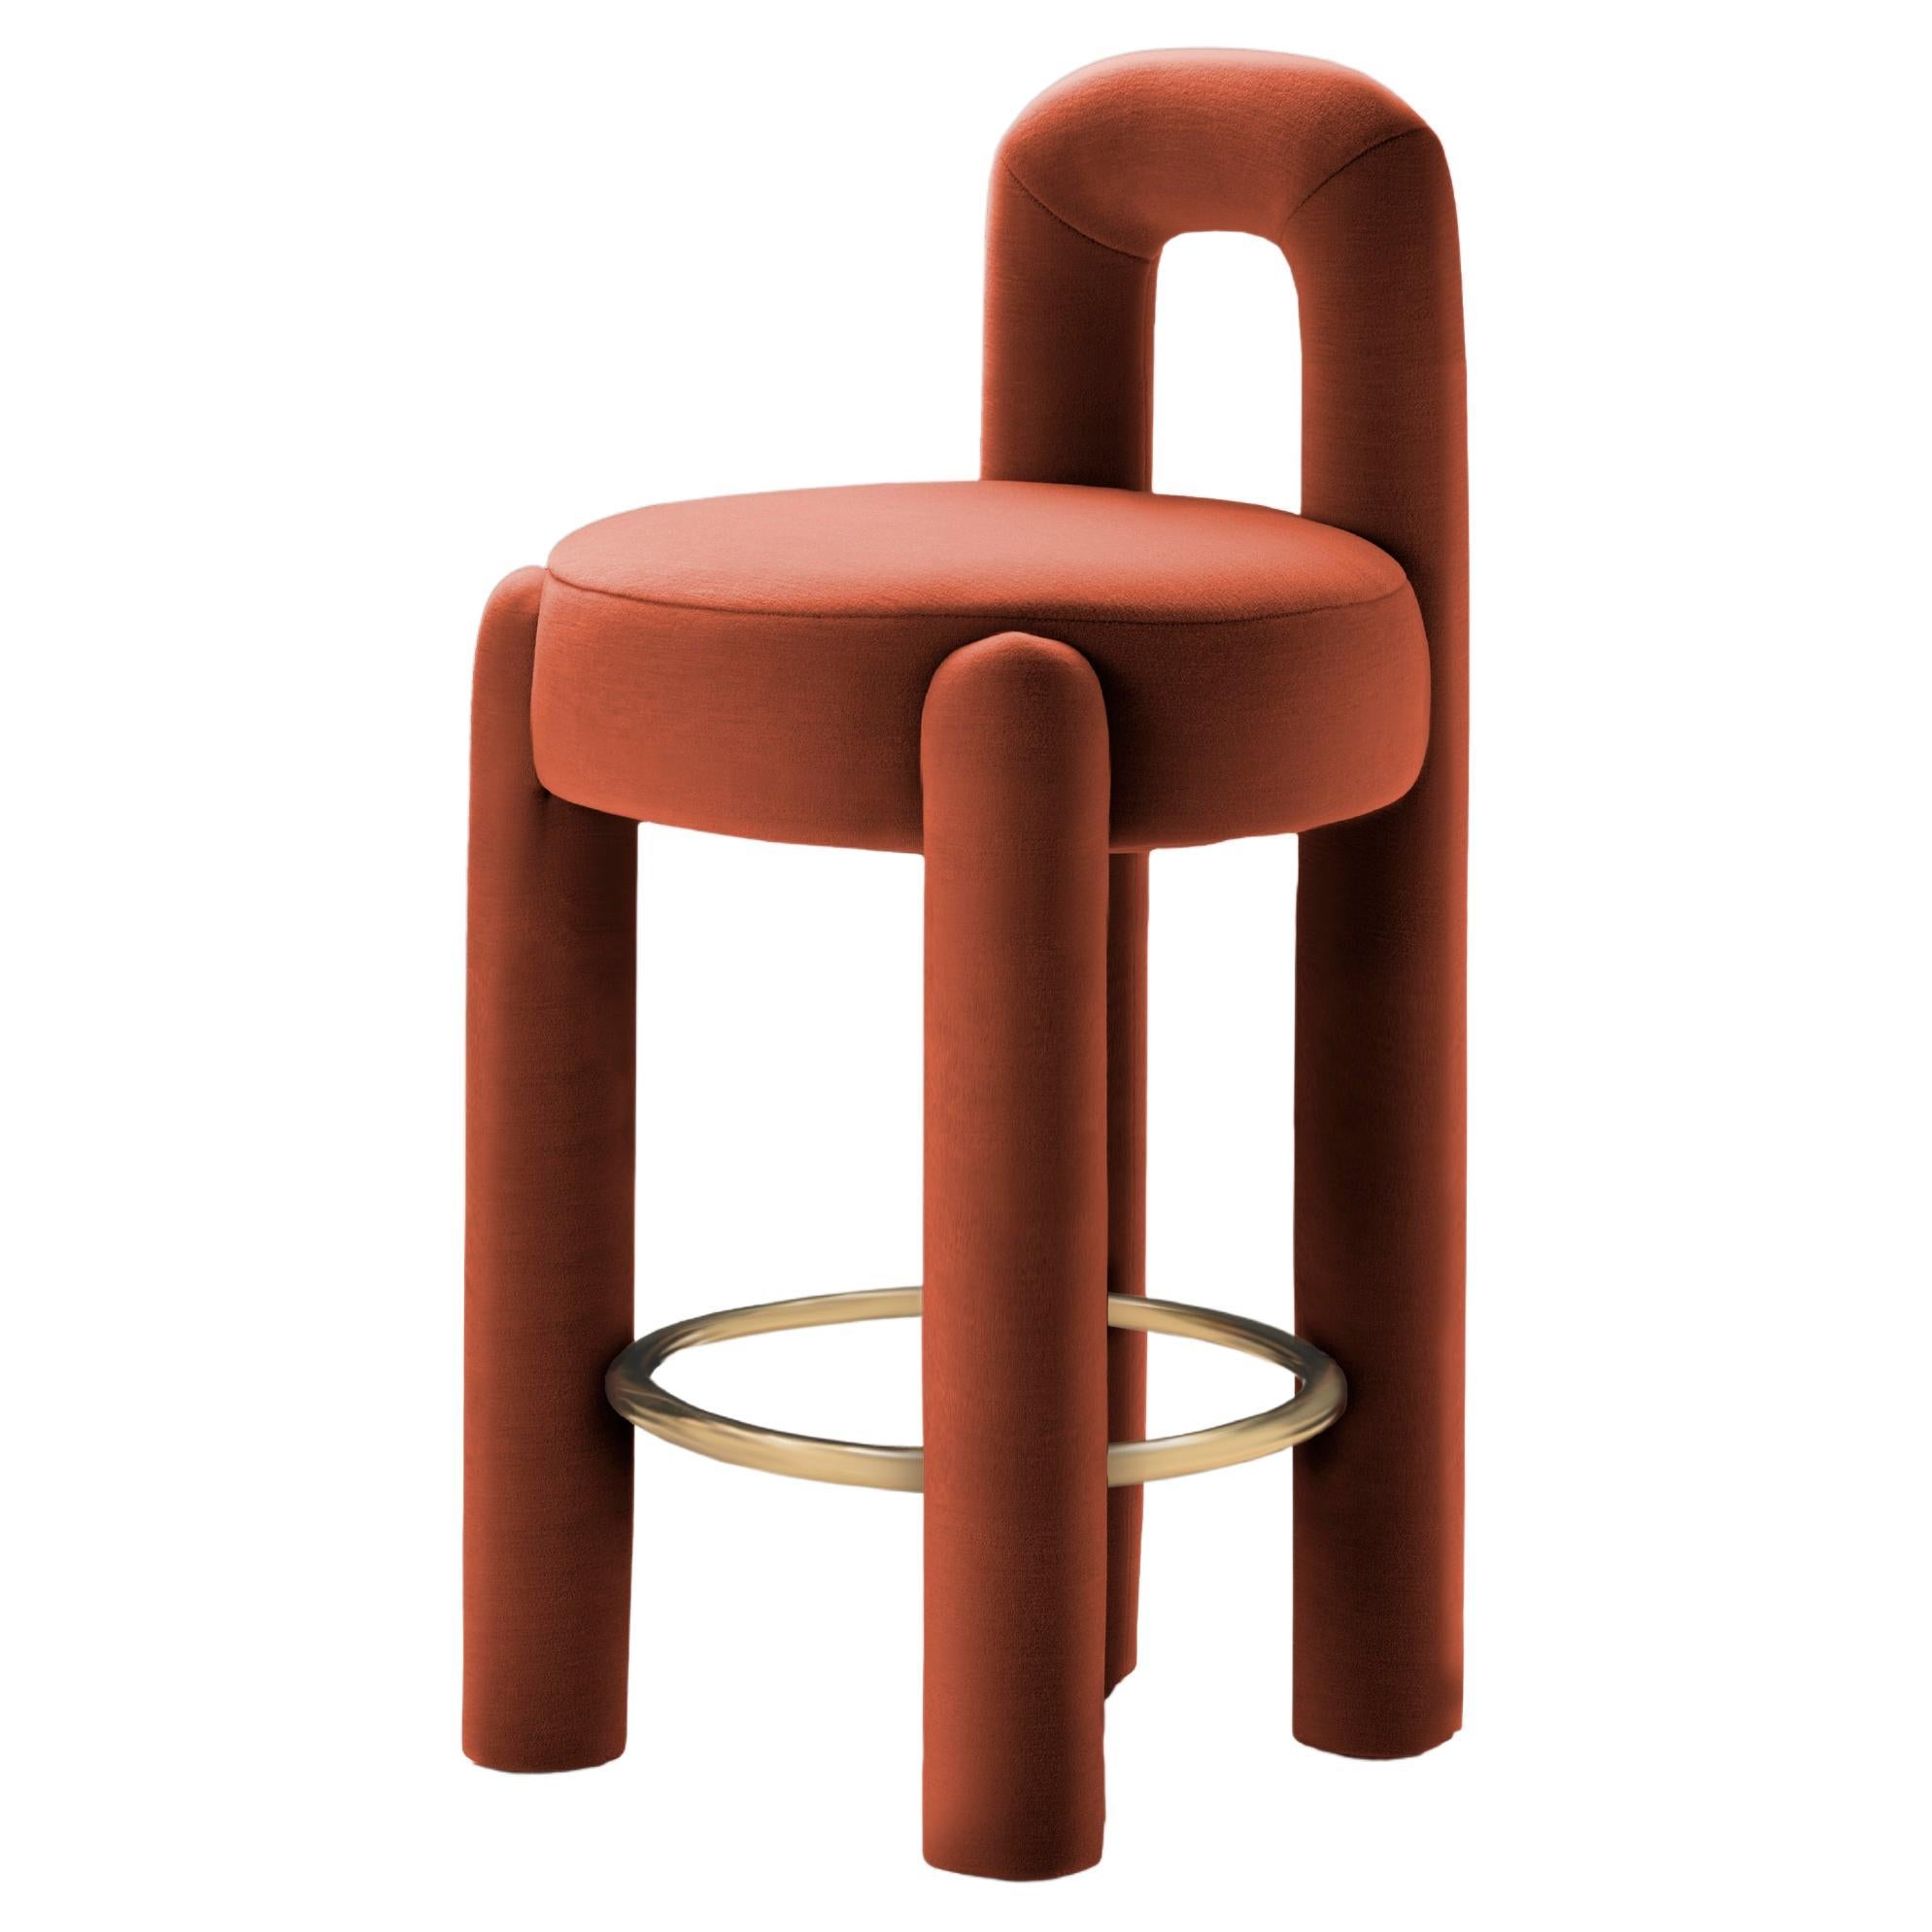 DOOQ! Organic Modern Marlon Bar Chair in Brown Kvadrat by P. Franceschini For Sale